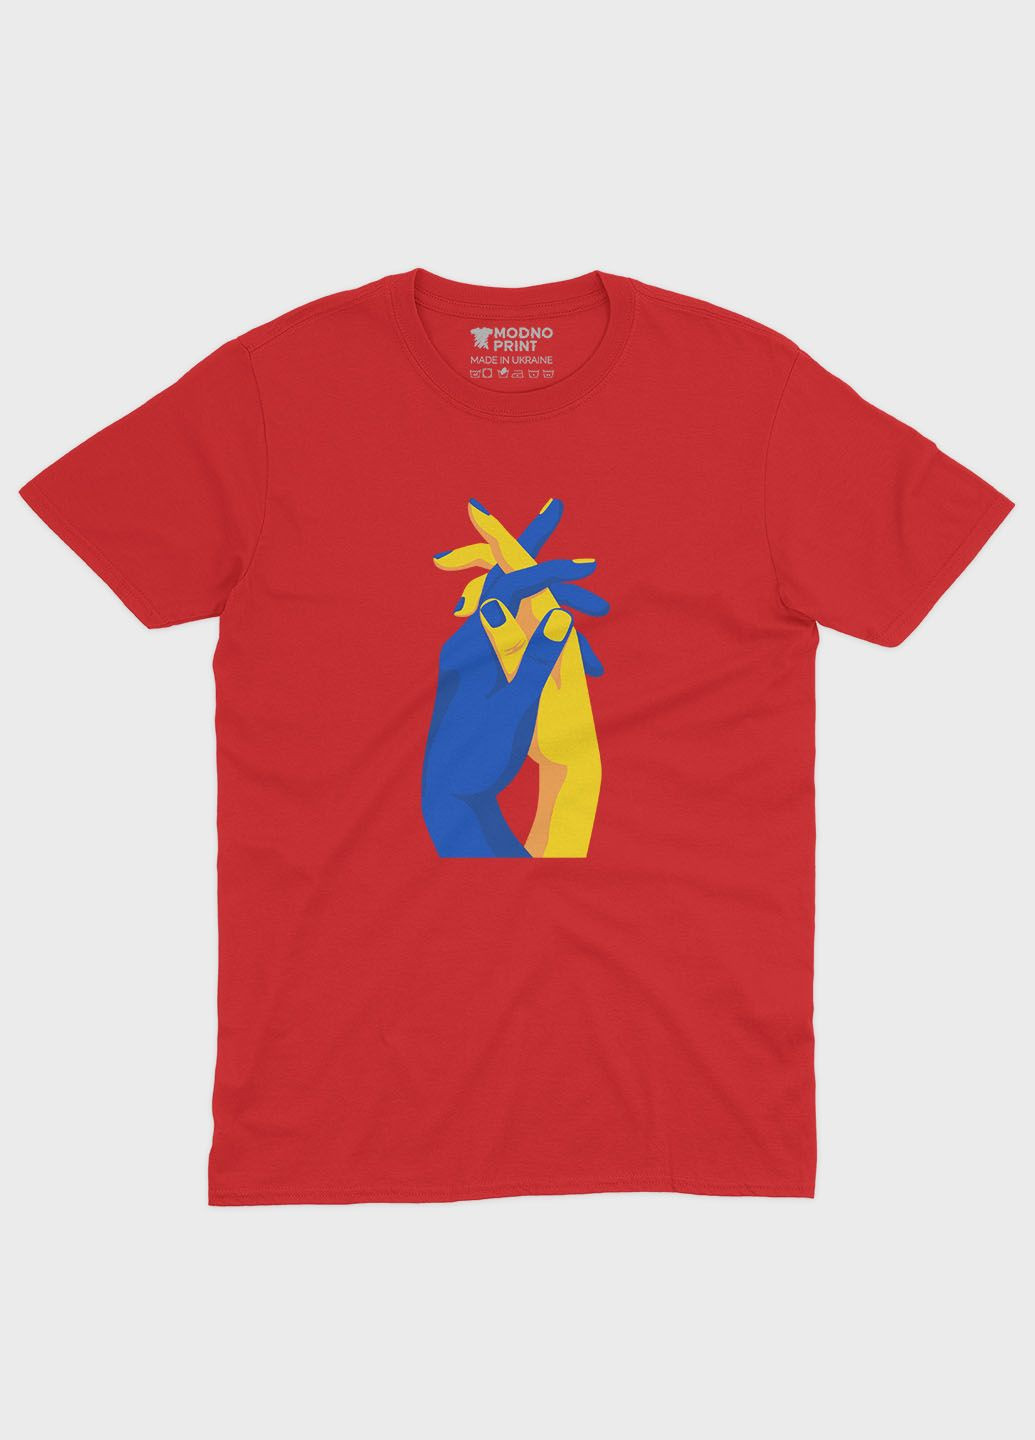 Красная мужская футболка с патриотическим принтом лодони (ts001-2-sre-005-1-032) Modno